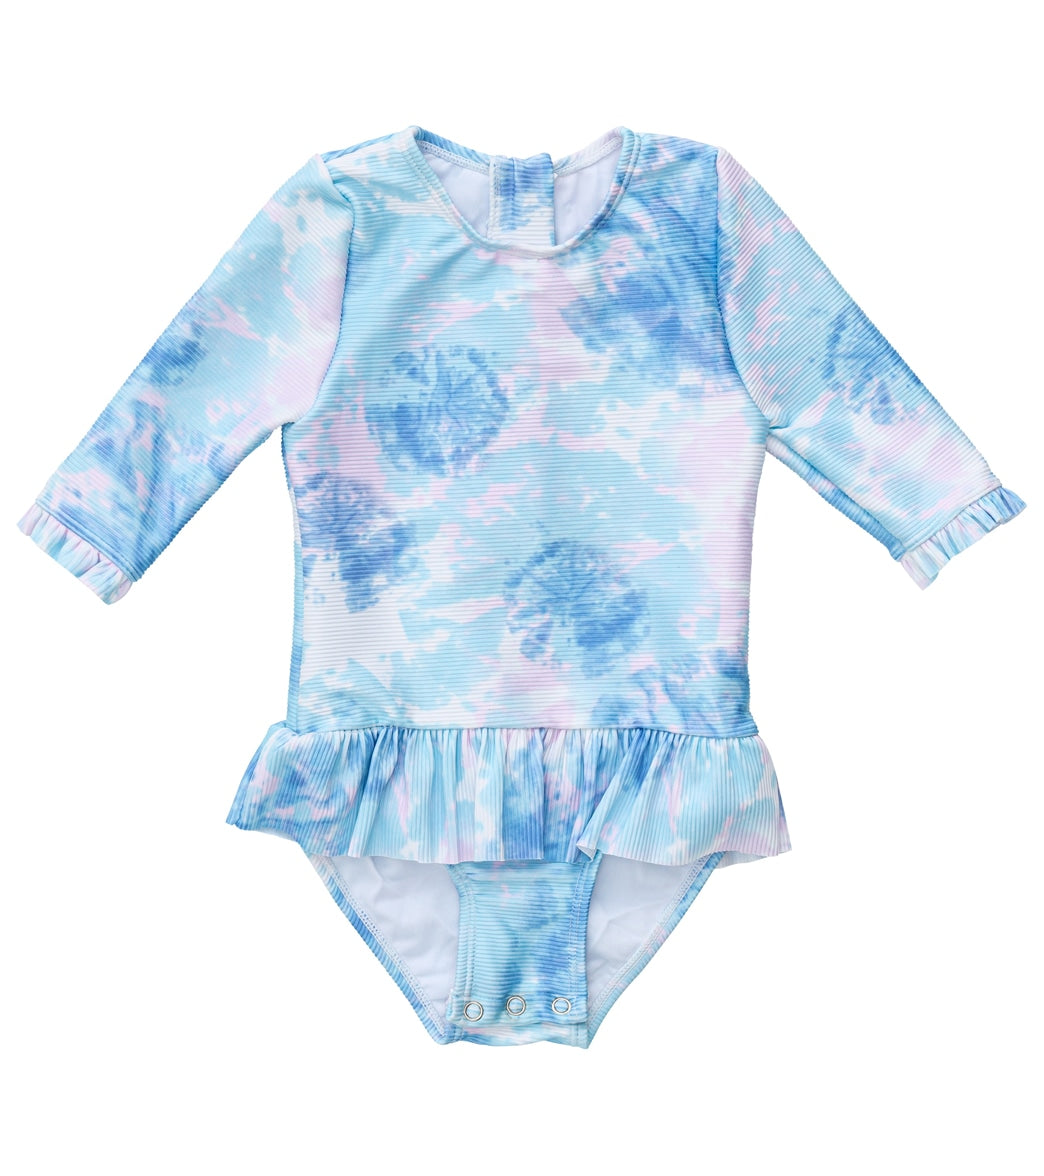 Snapper Rock Girls Sky Dye 3/4 Sleeve Surf Suit (Baby, Toddler)